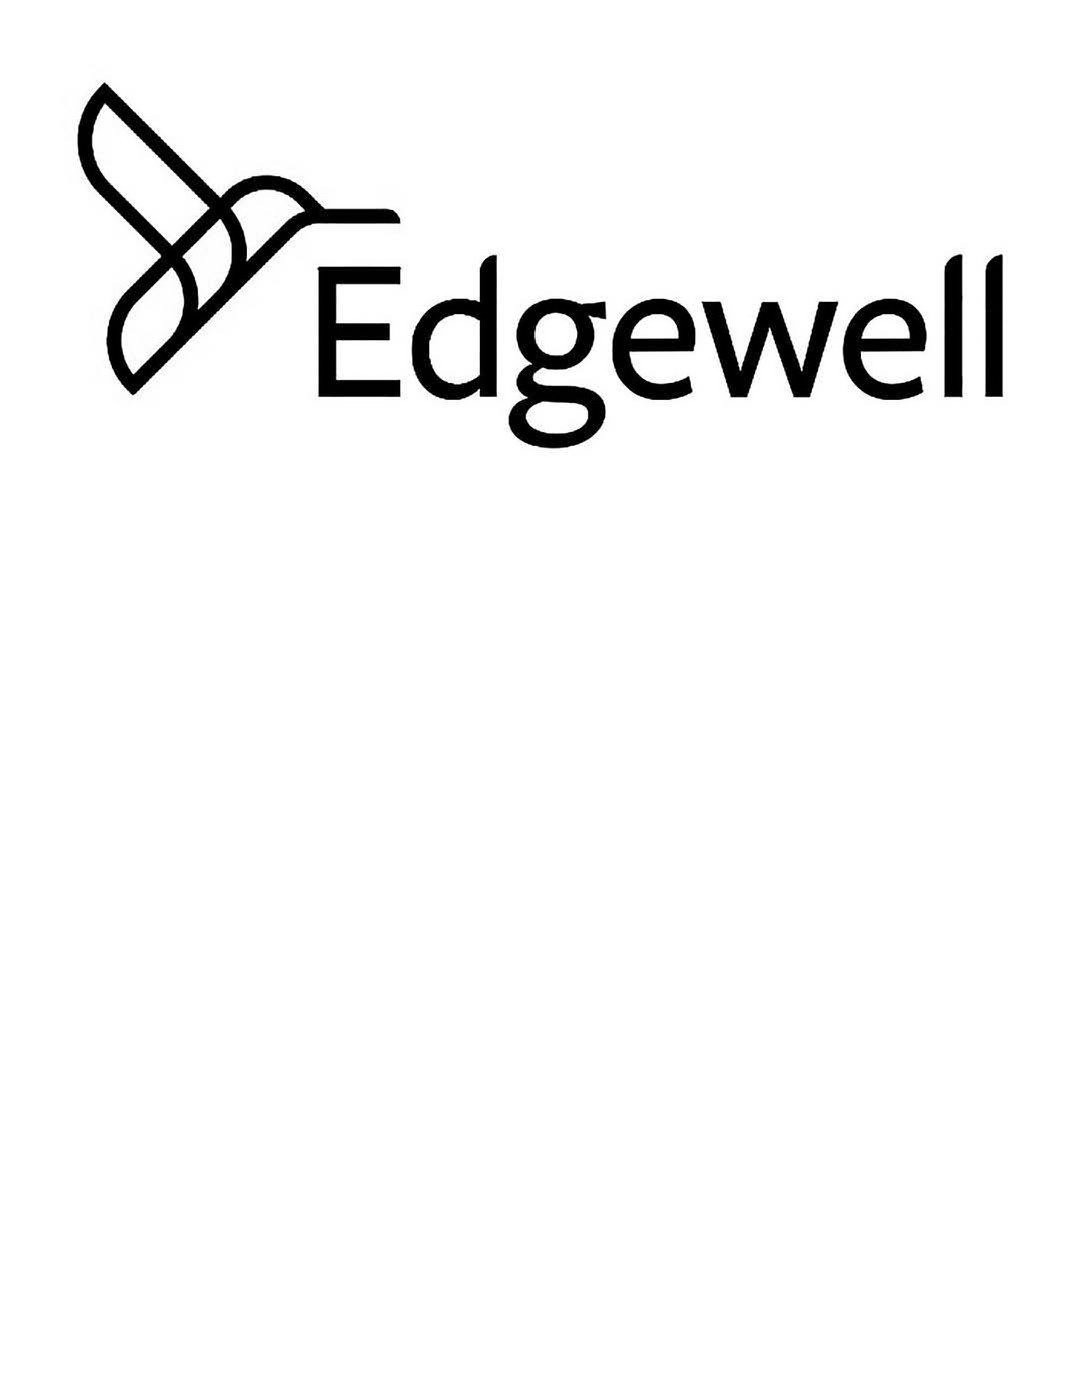 EDGEWELL